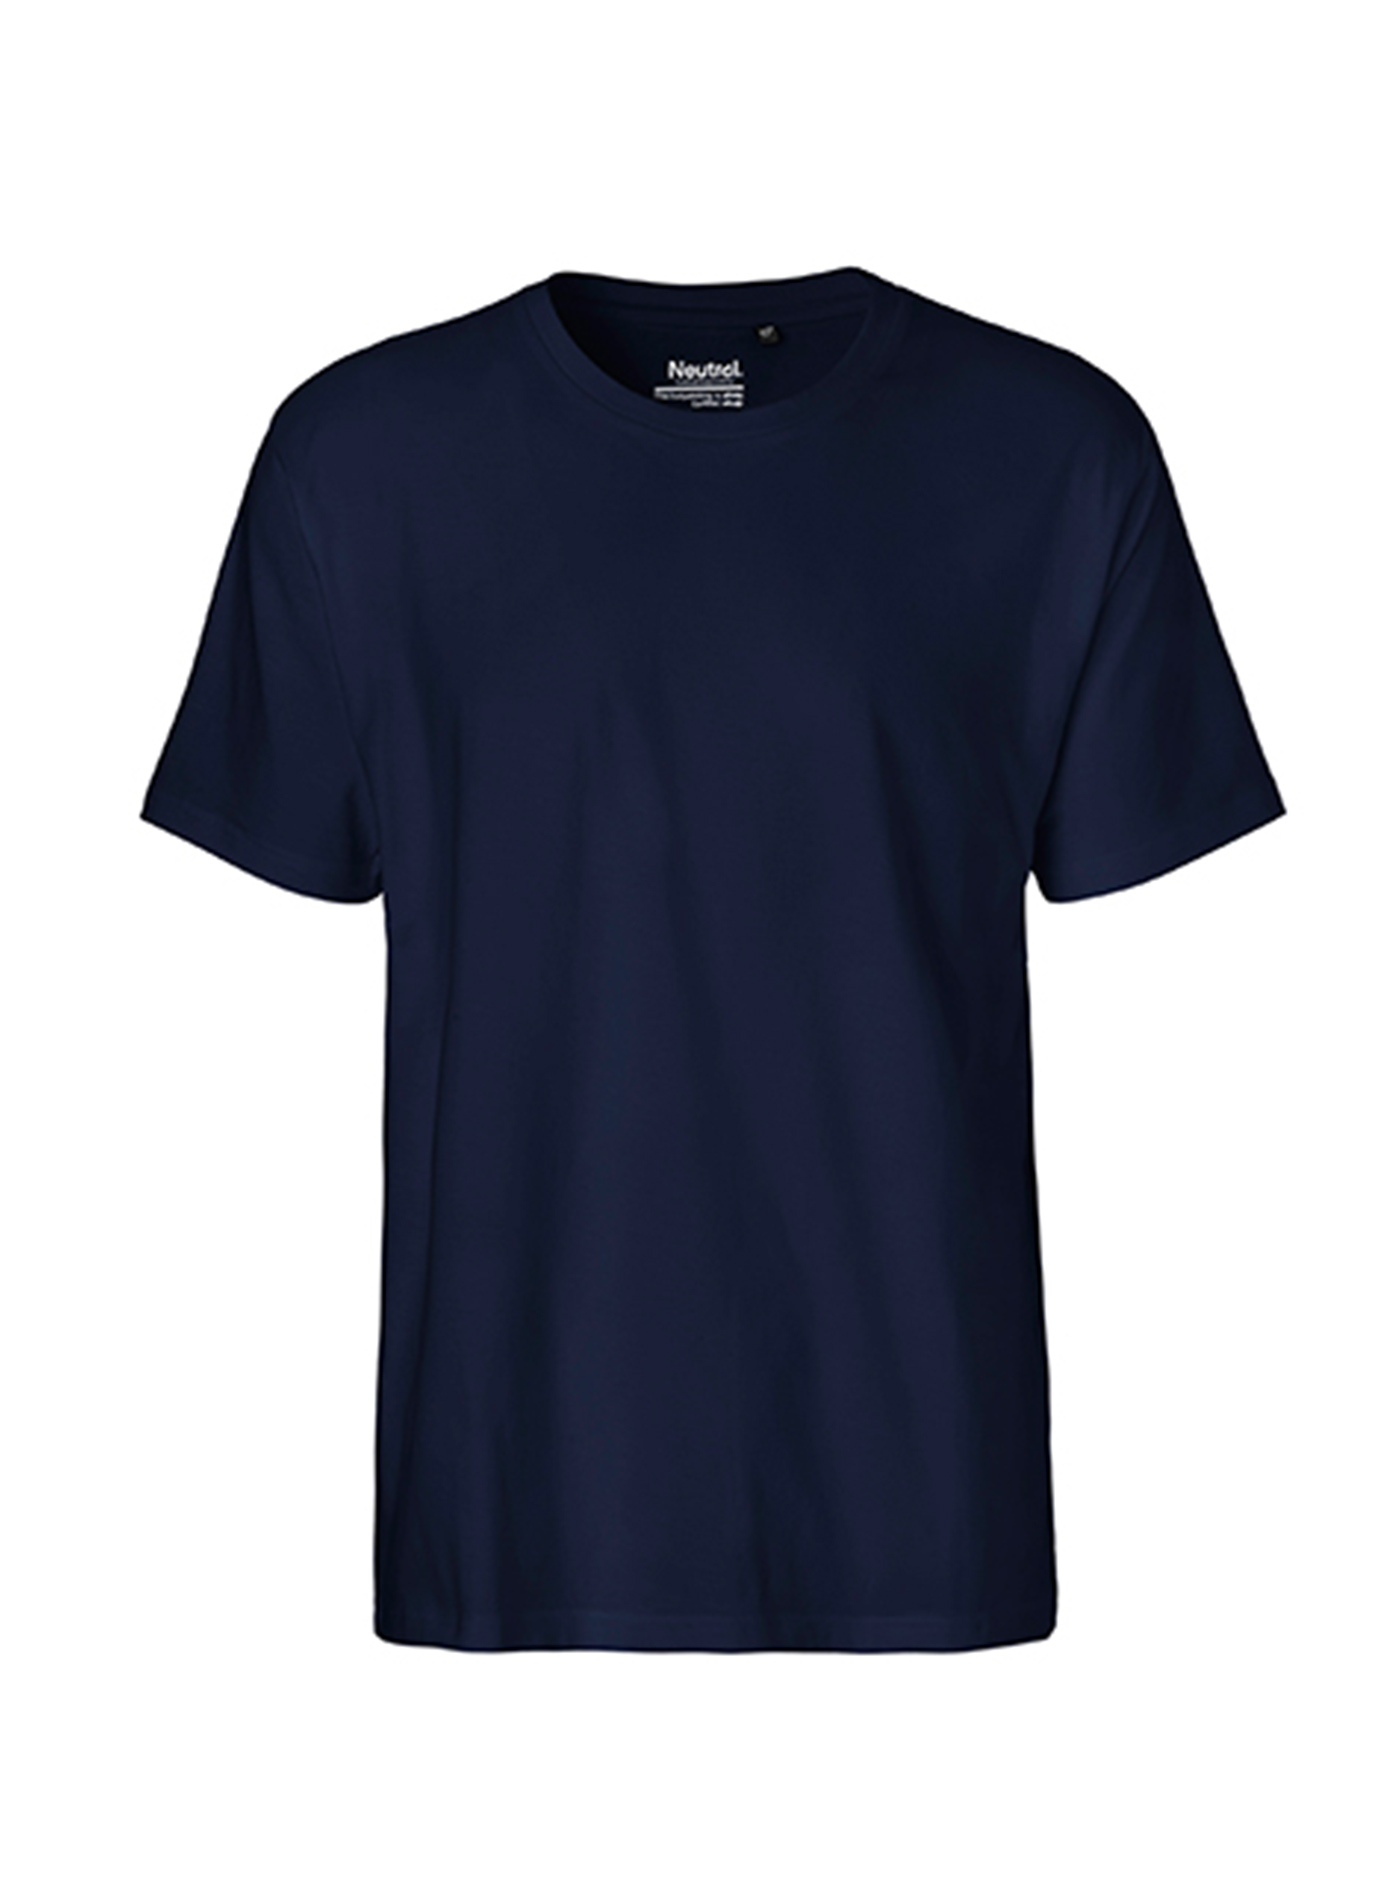 Pánské tričko Neutral Classic - Námořní modrá XL